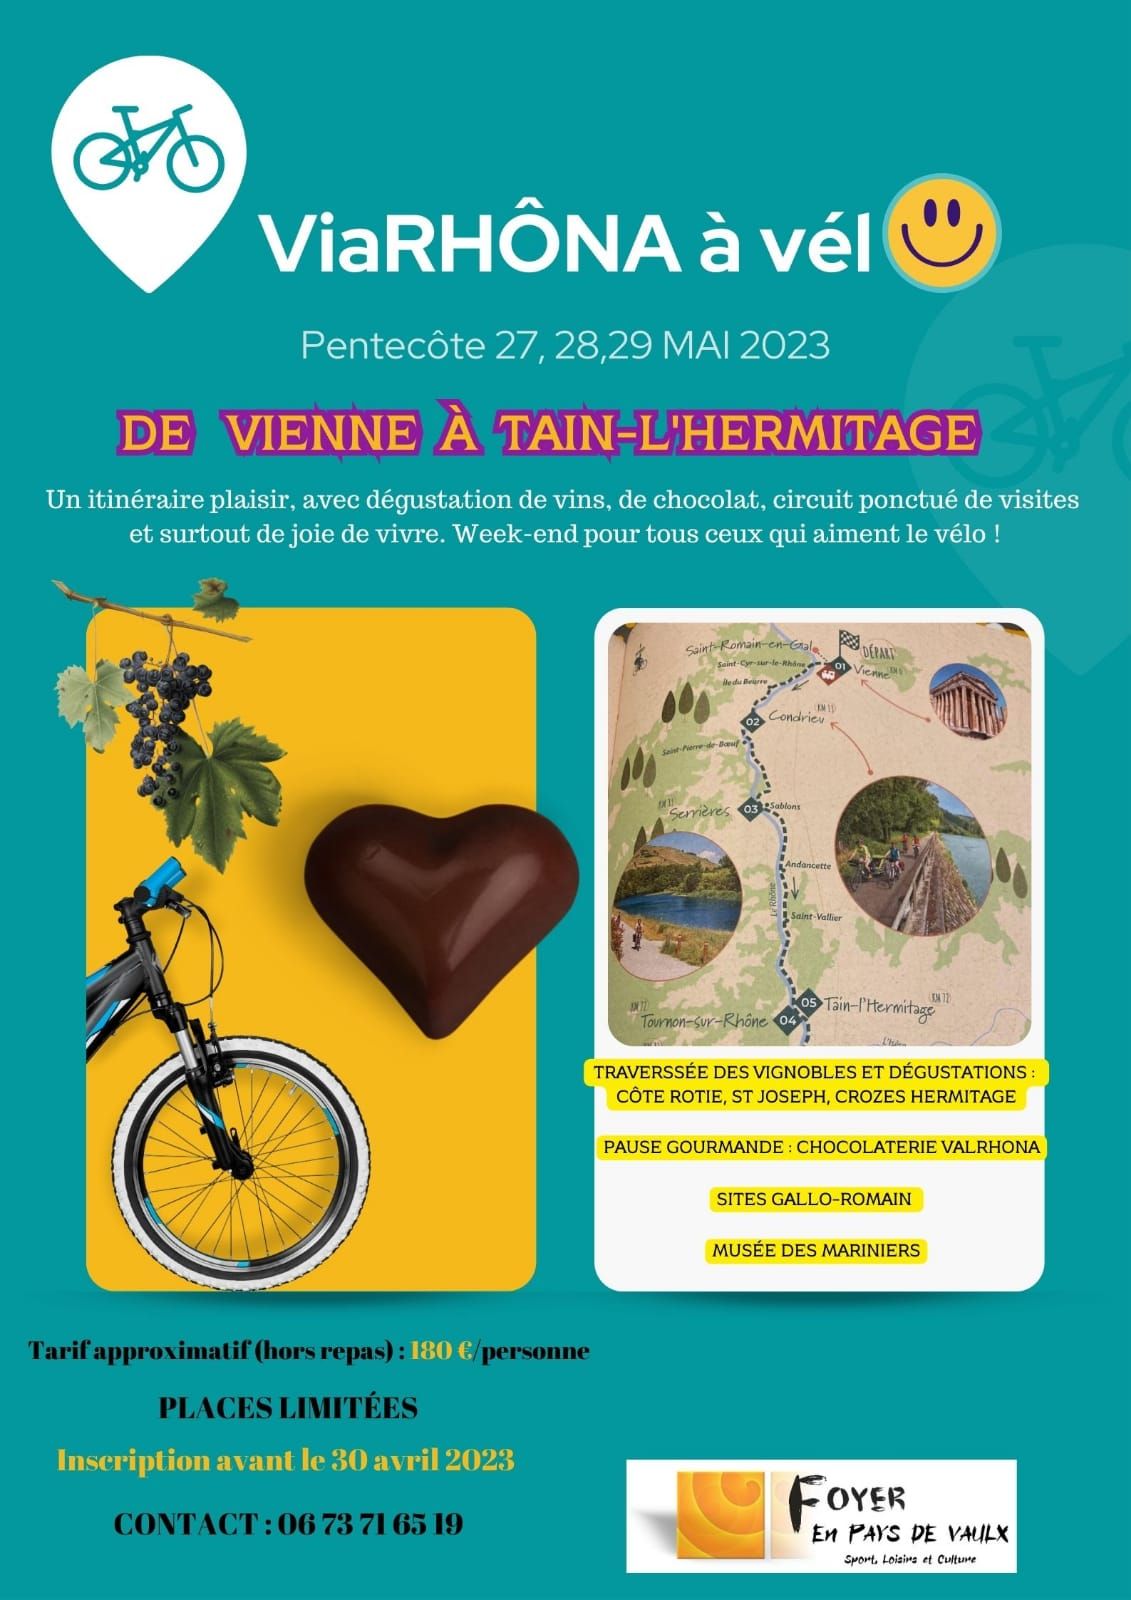 La Via-Rhôna à vélo ! 27-28-29 Mai